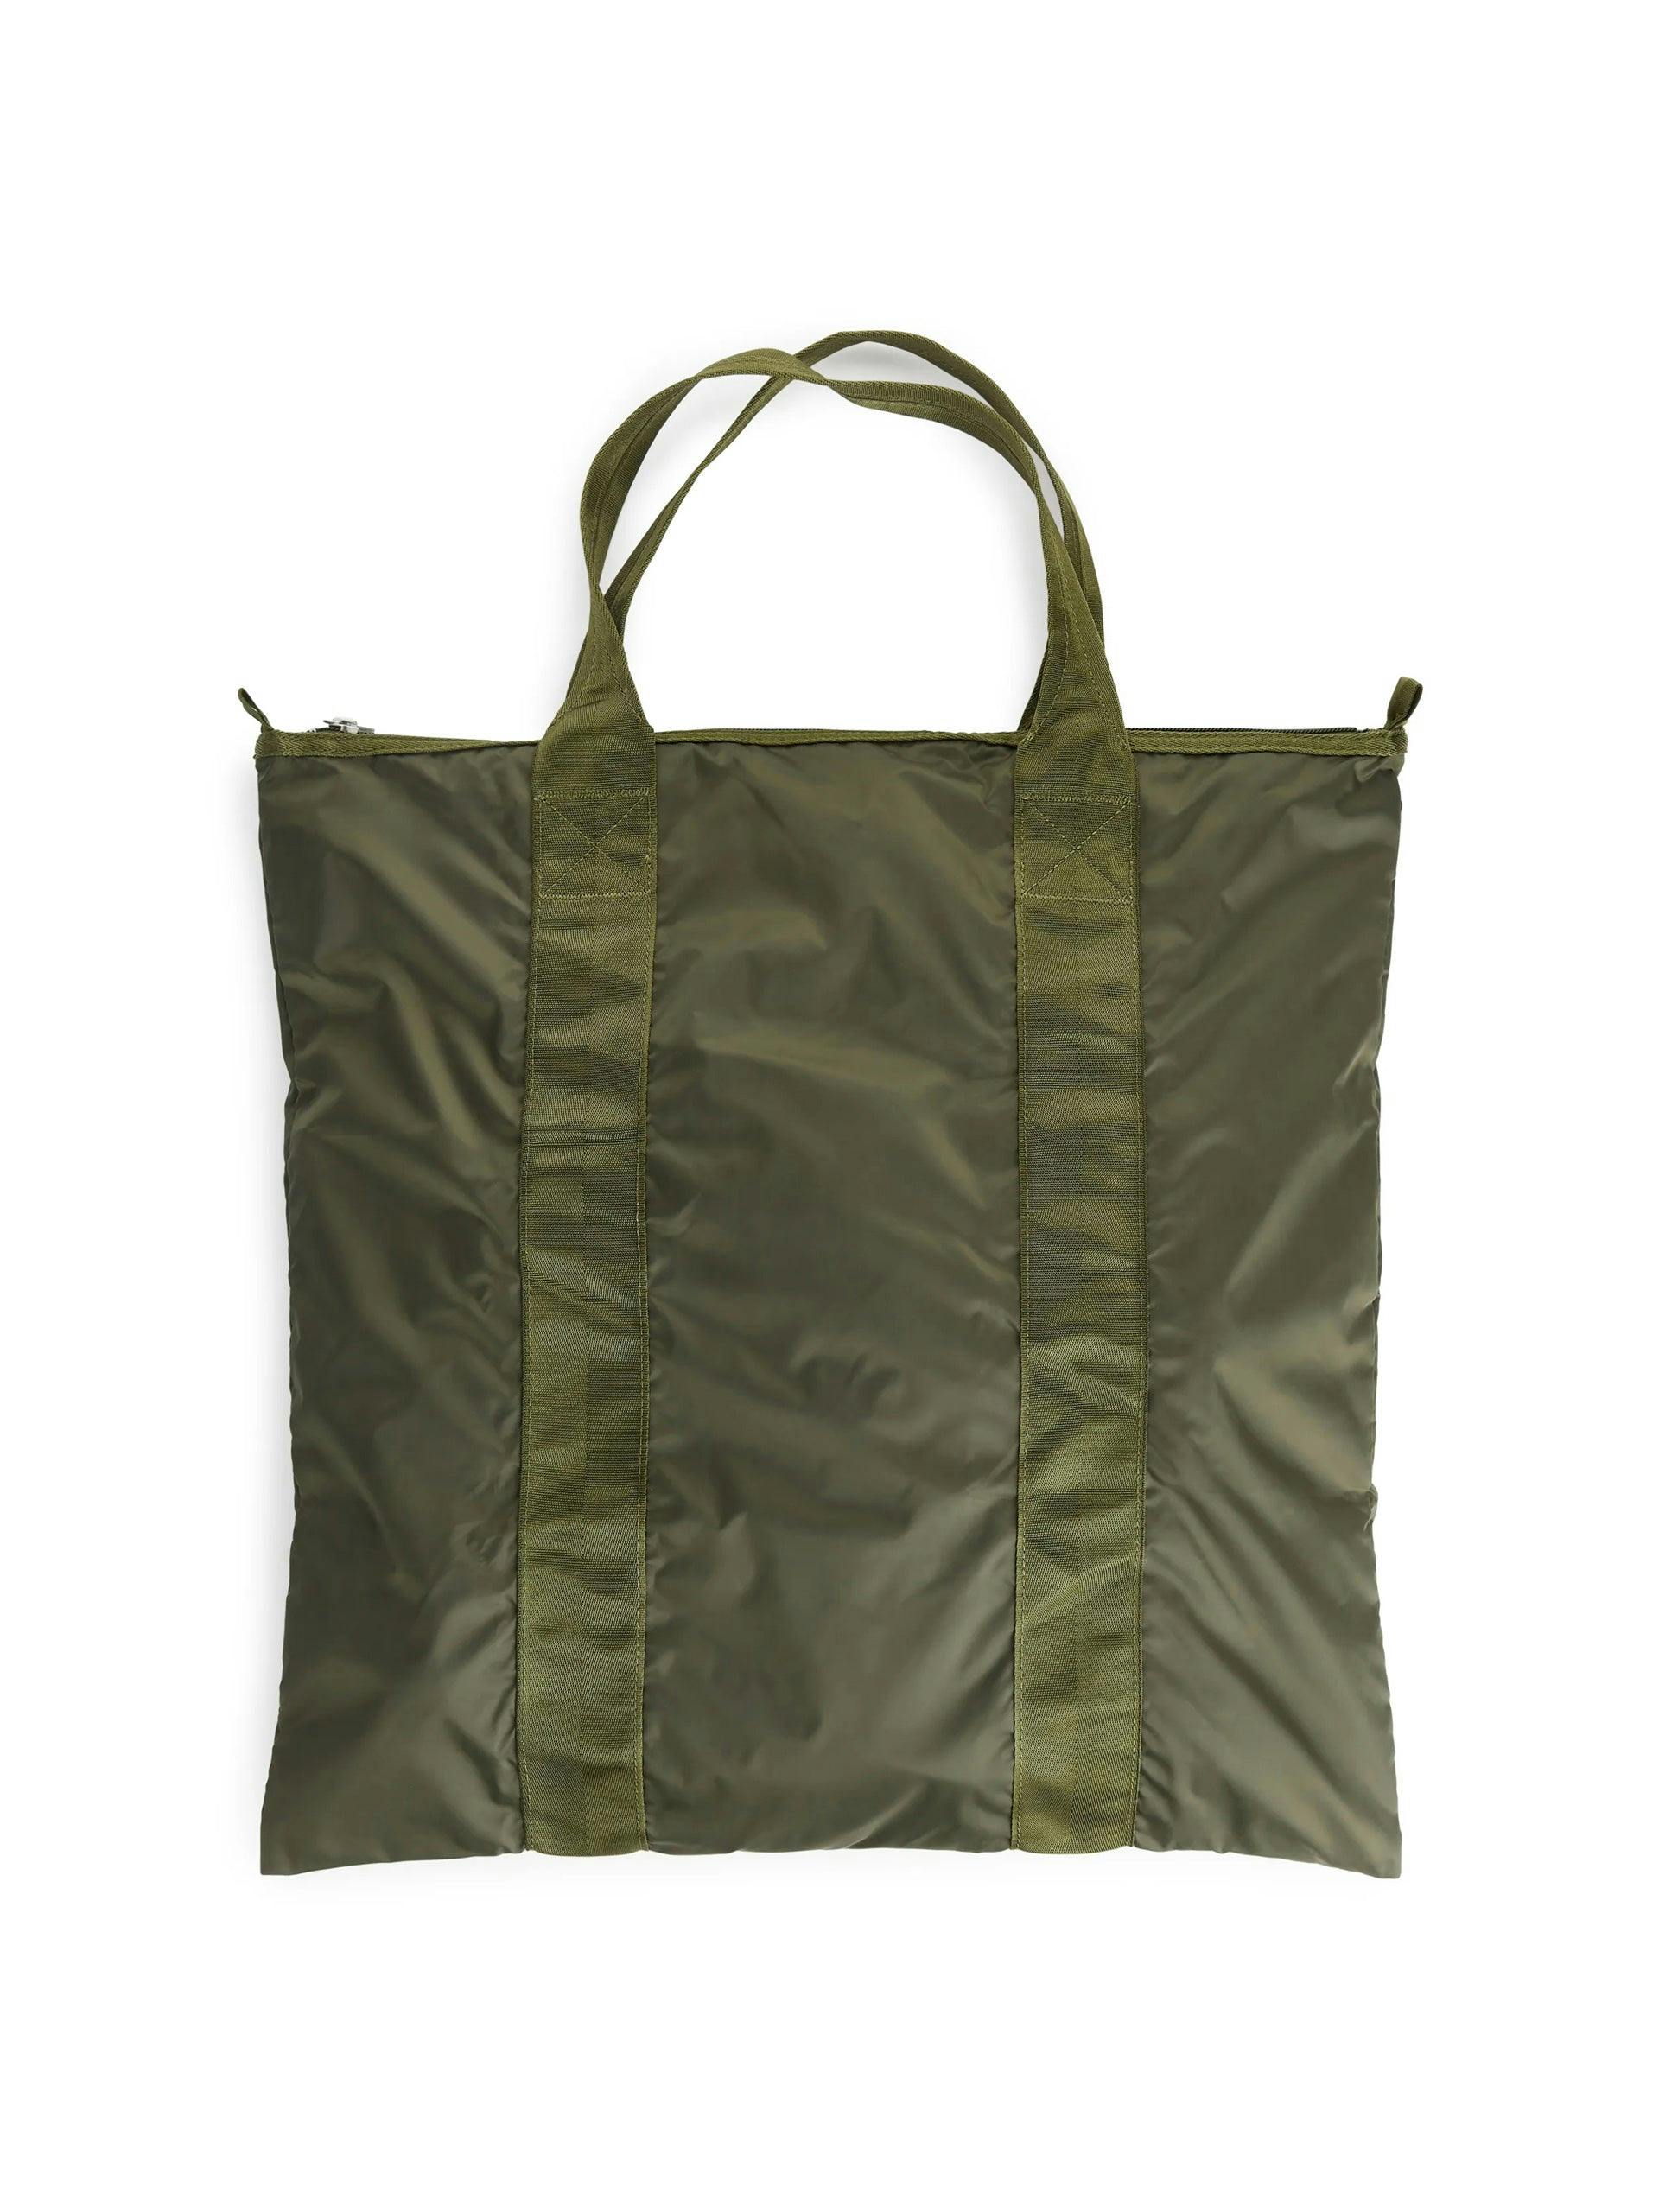 Packable tote bag